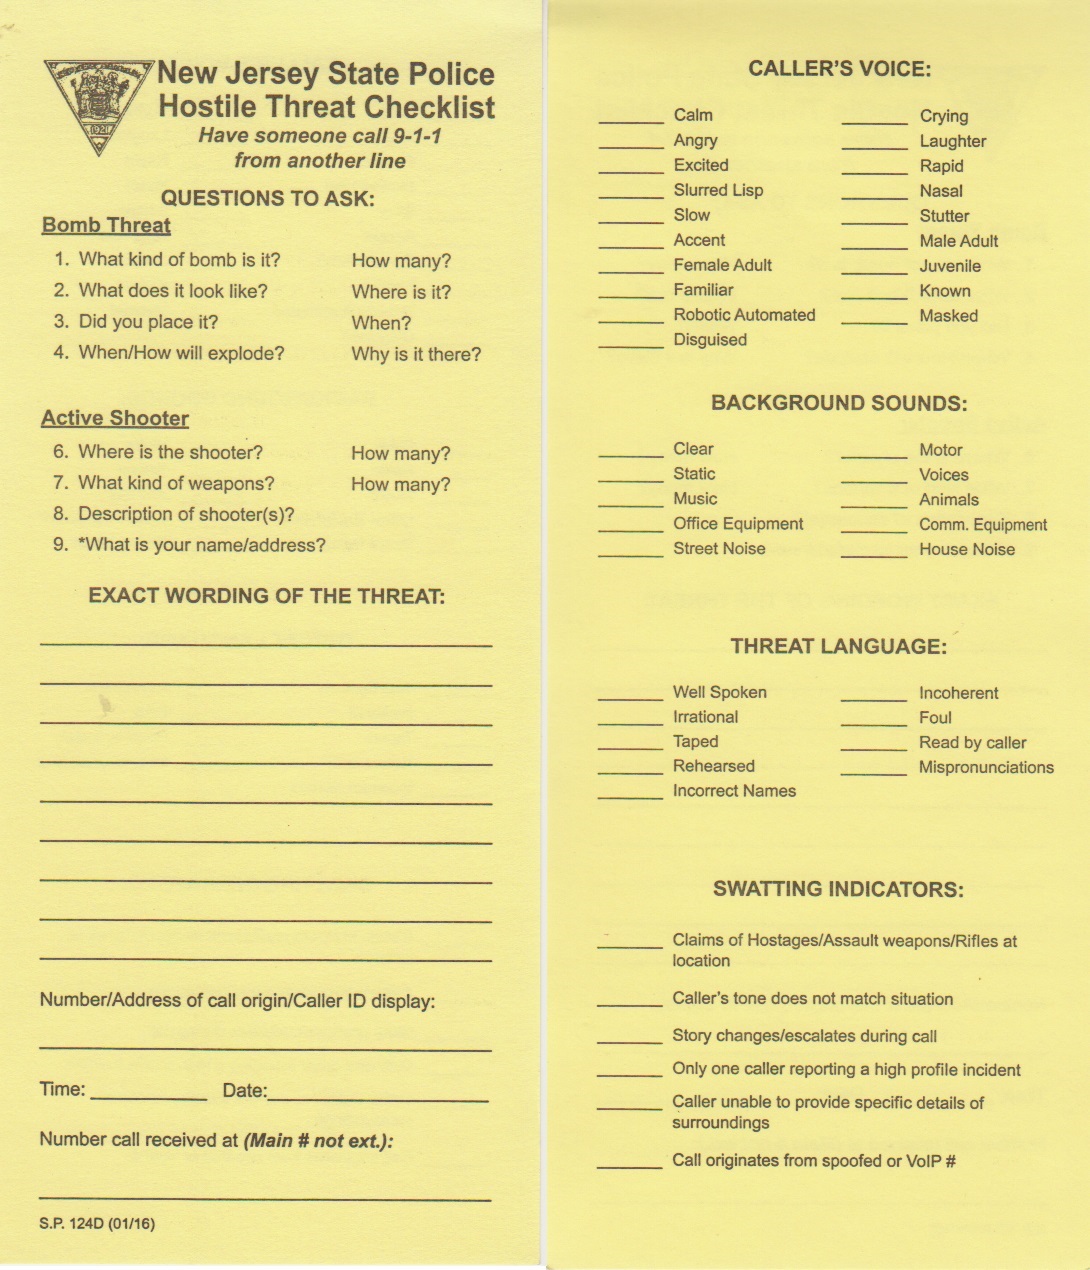 Hostile Threat Checklist-NJSP.jpg